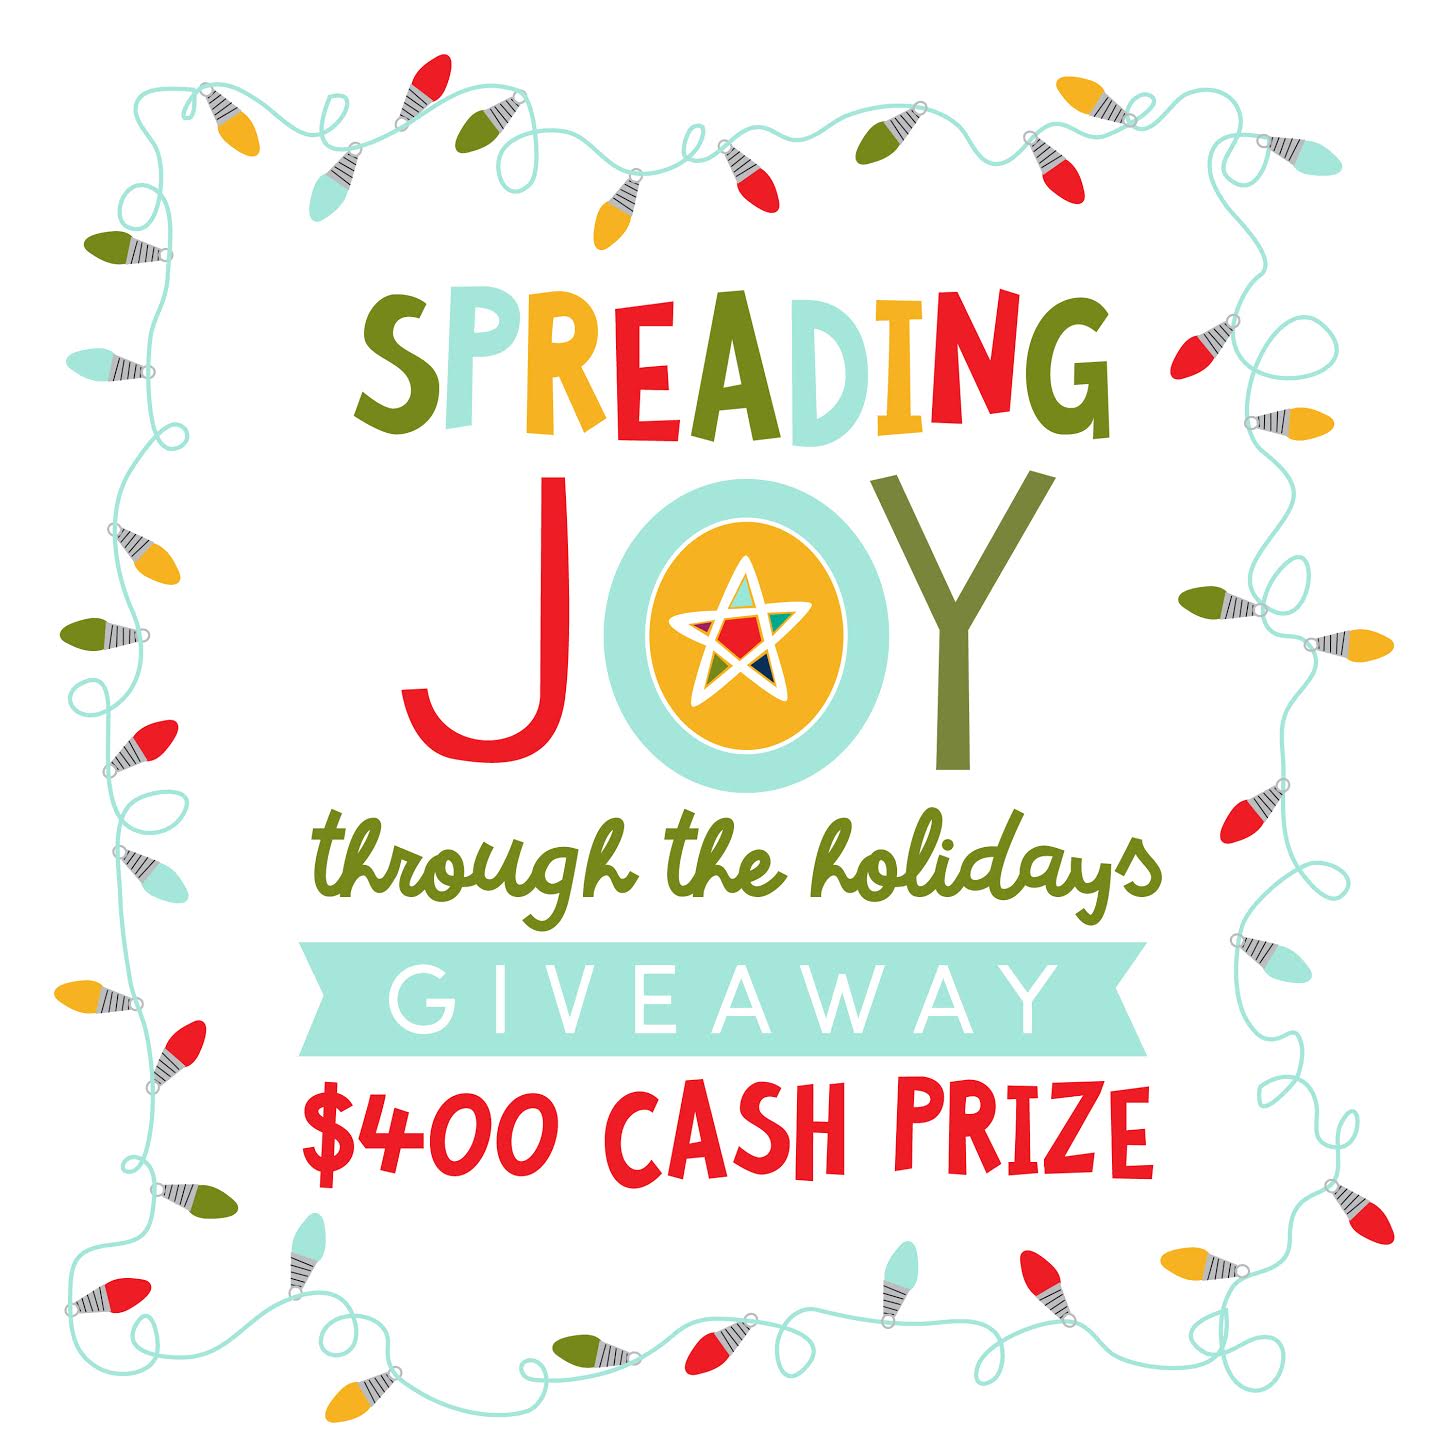 Spread the Joy $400 Cash Giveaway